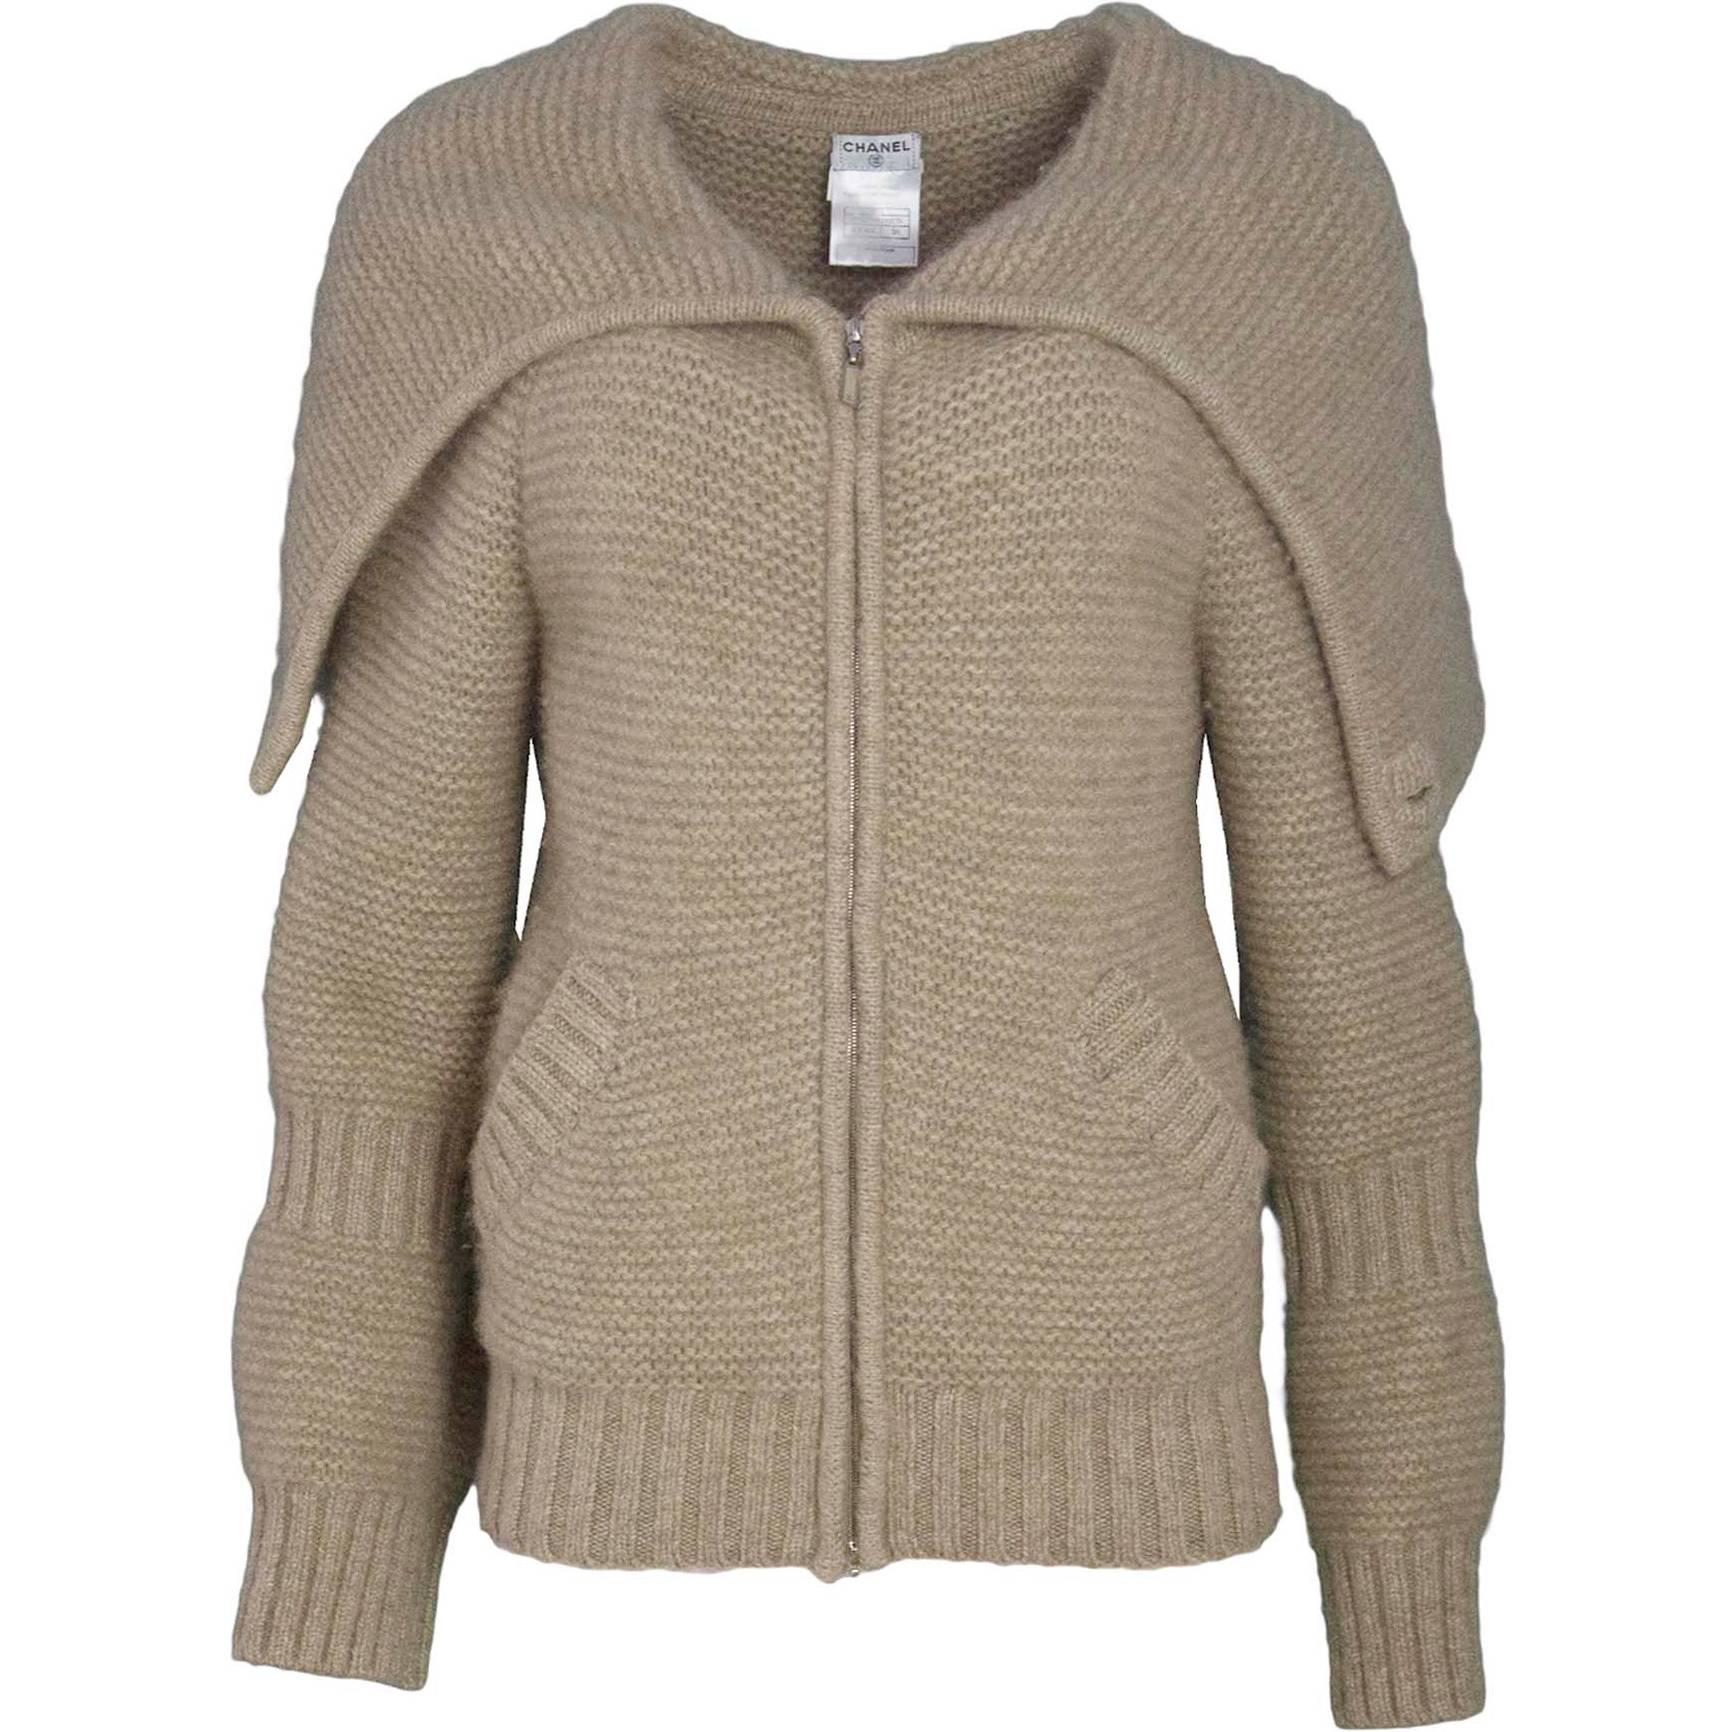 Chanel Oatmeal Cashmere Knit Sweater Sz FR38